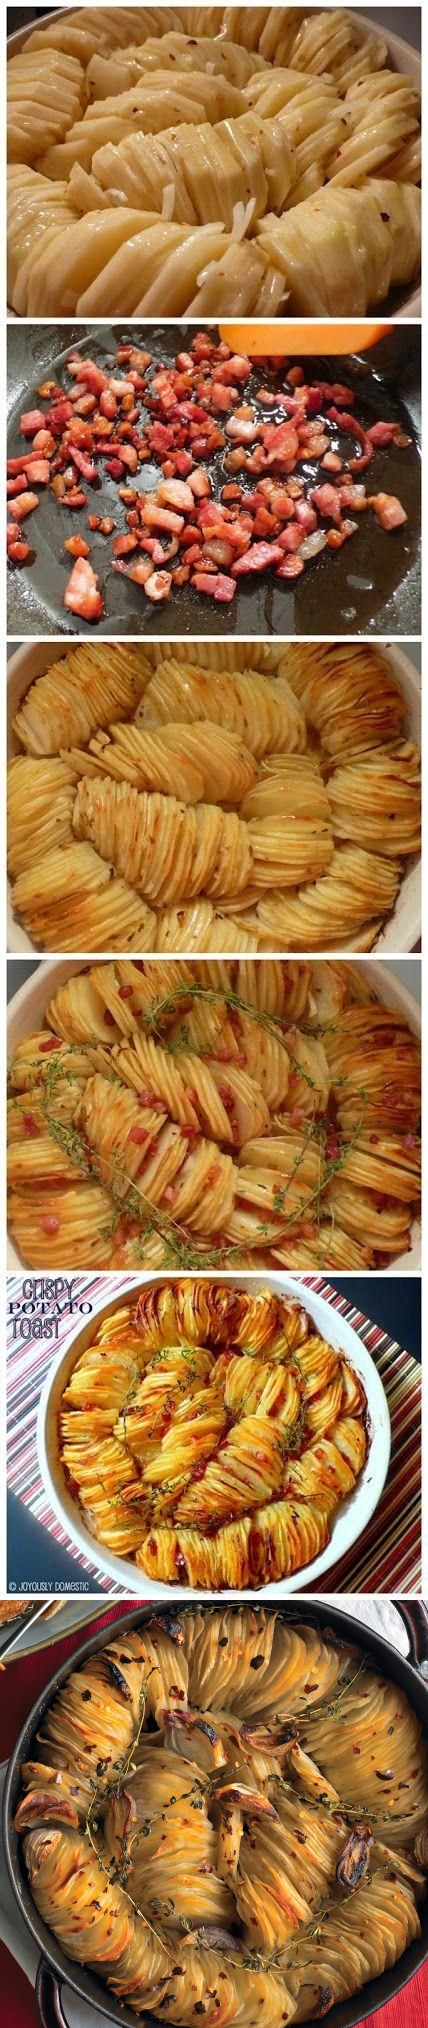 Crispy Potato Roast